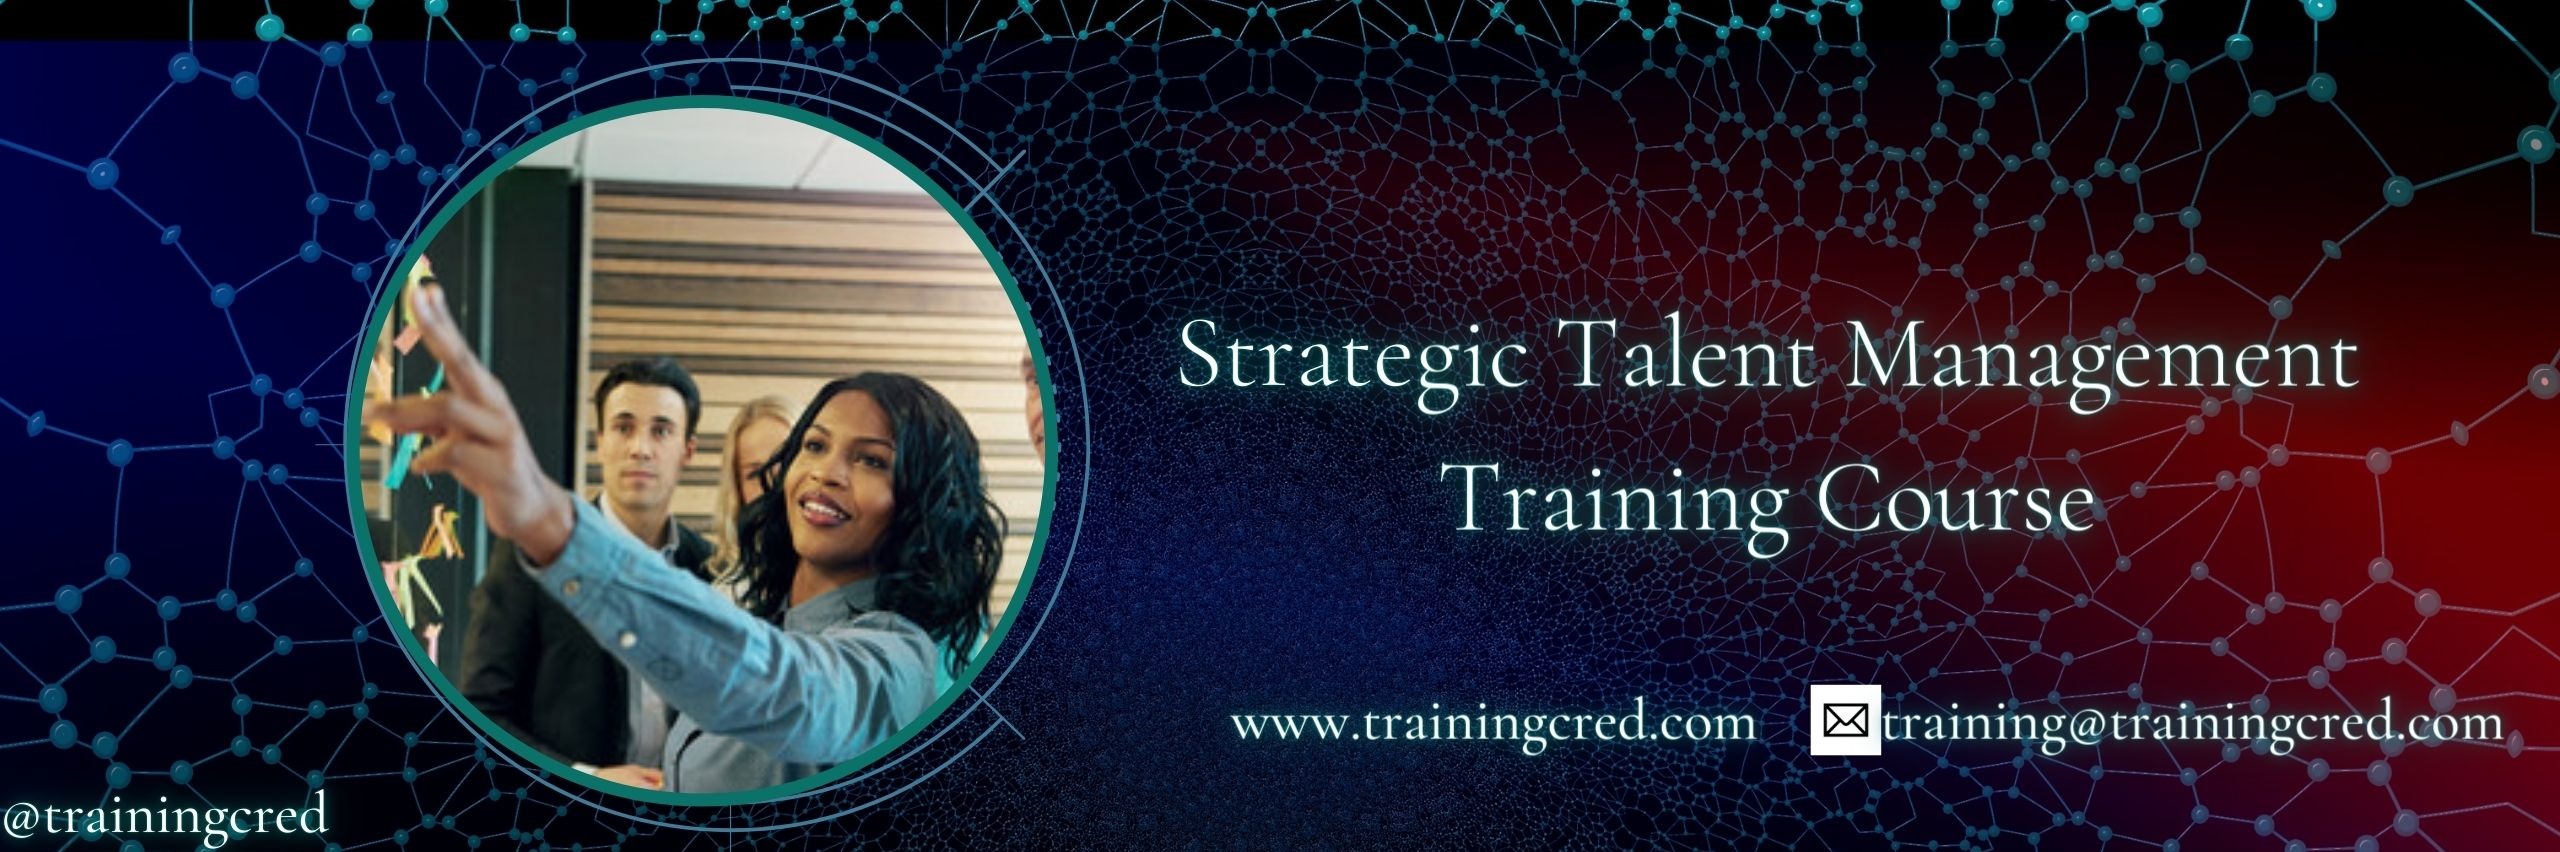 Strategic Talent Management Training